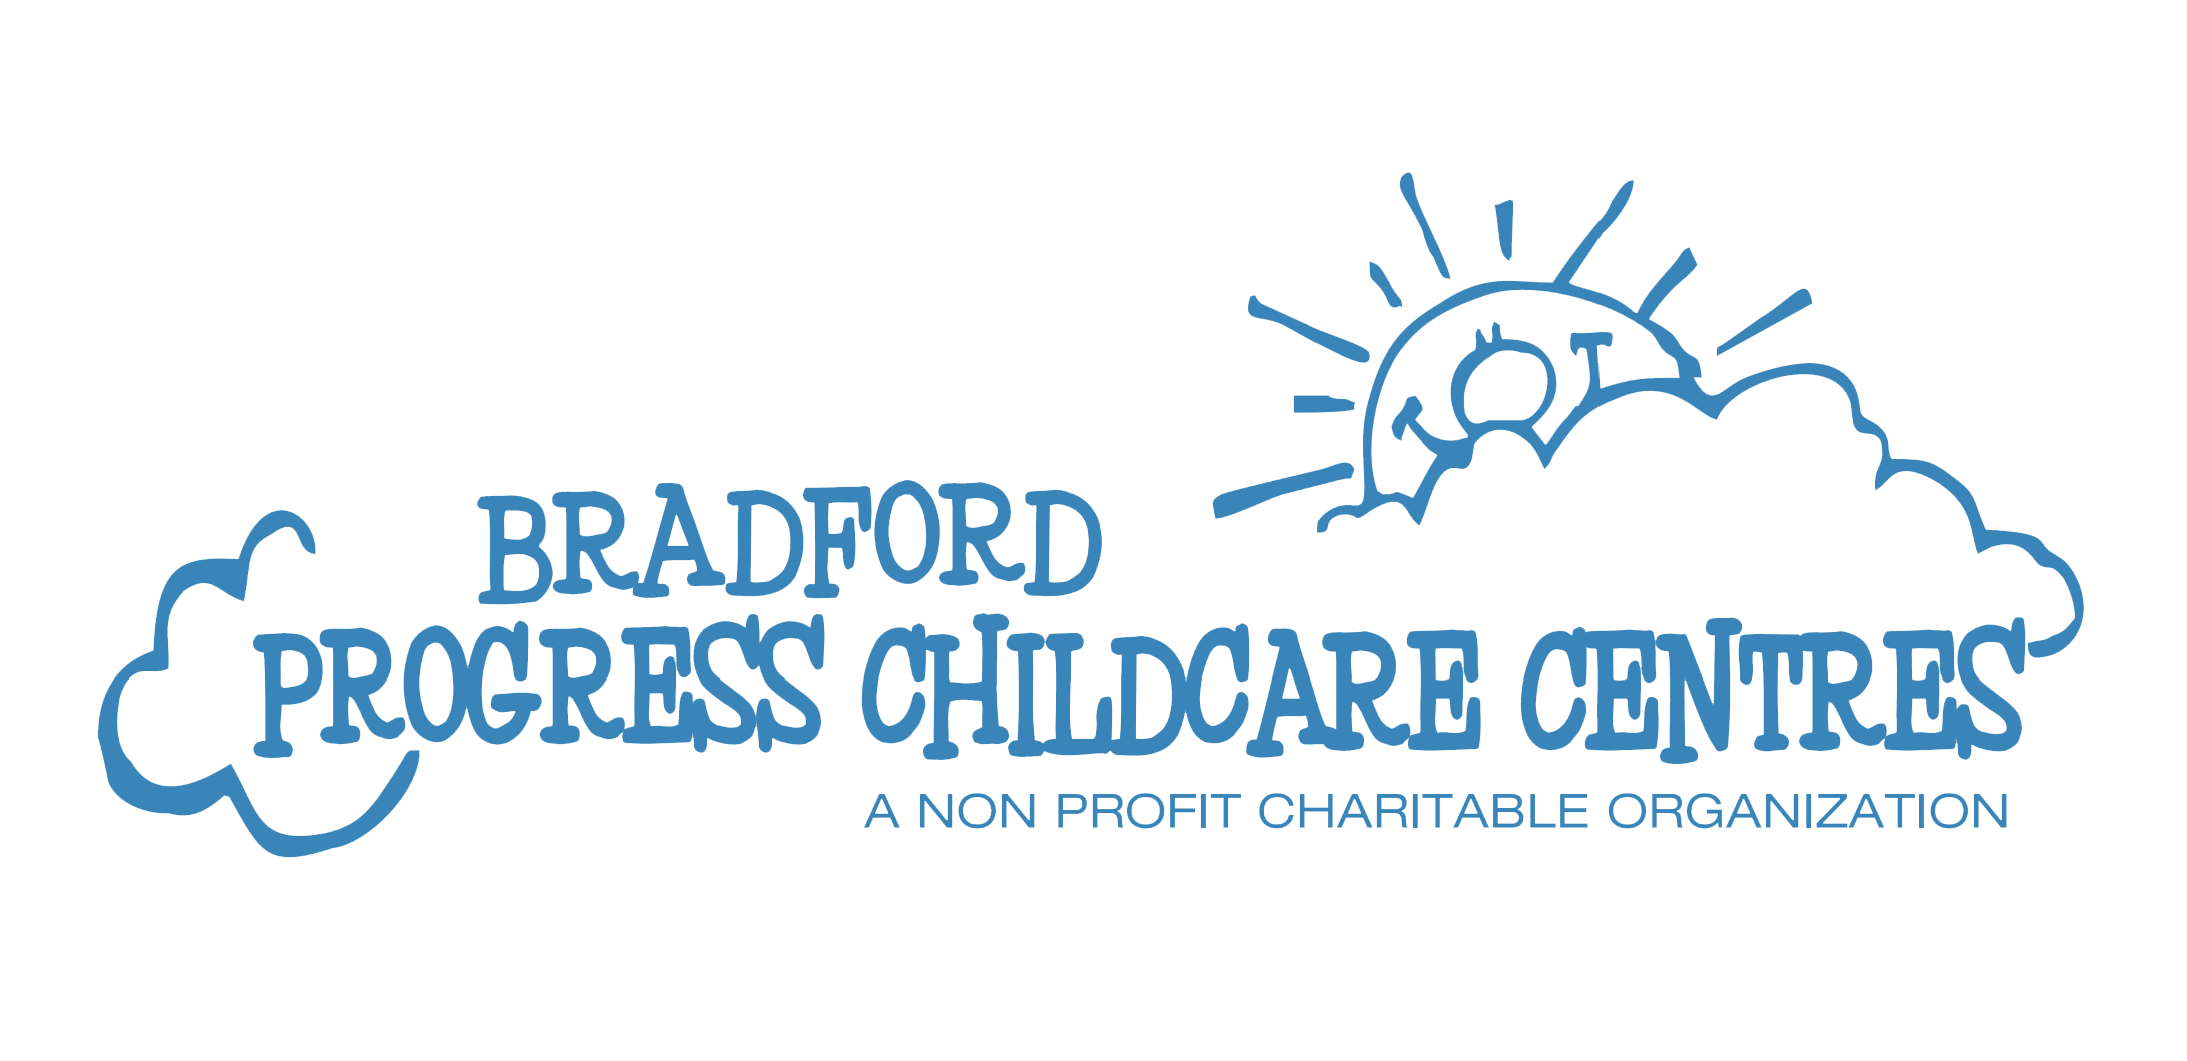 Bradford Progress Childcare Centres